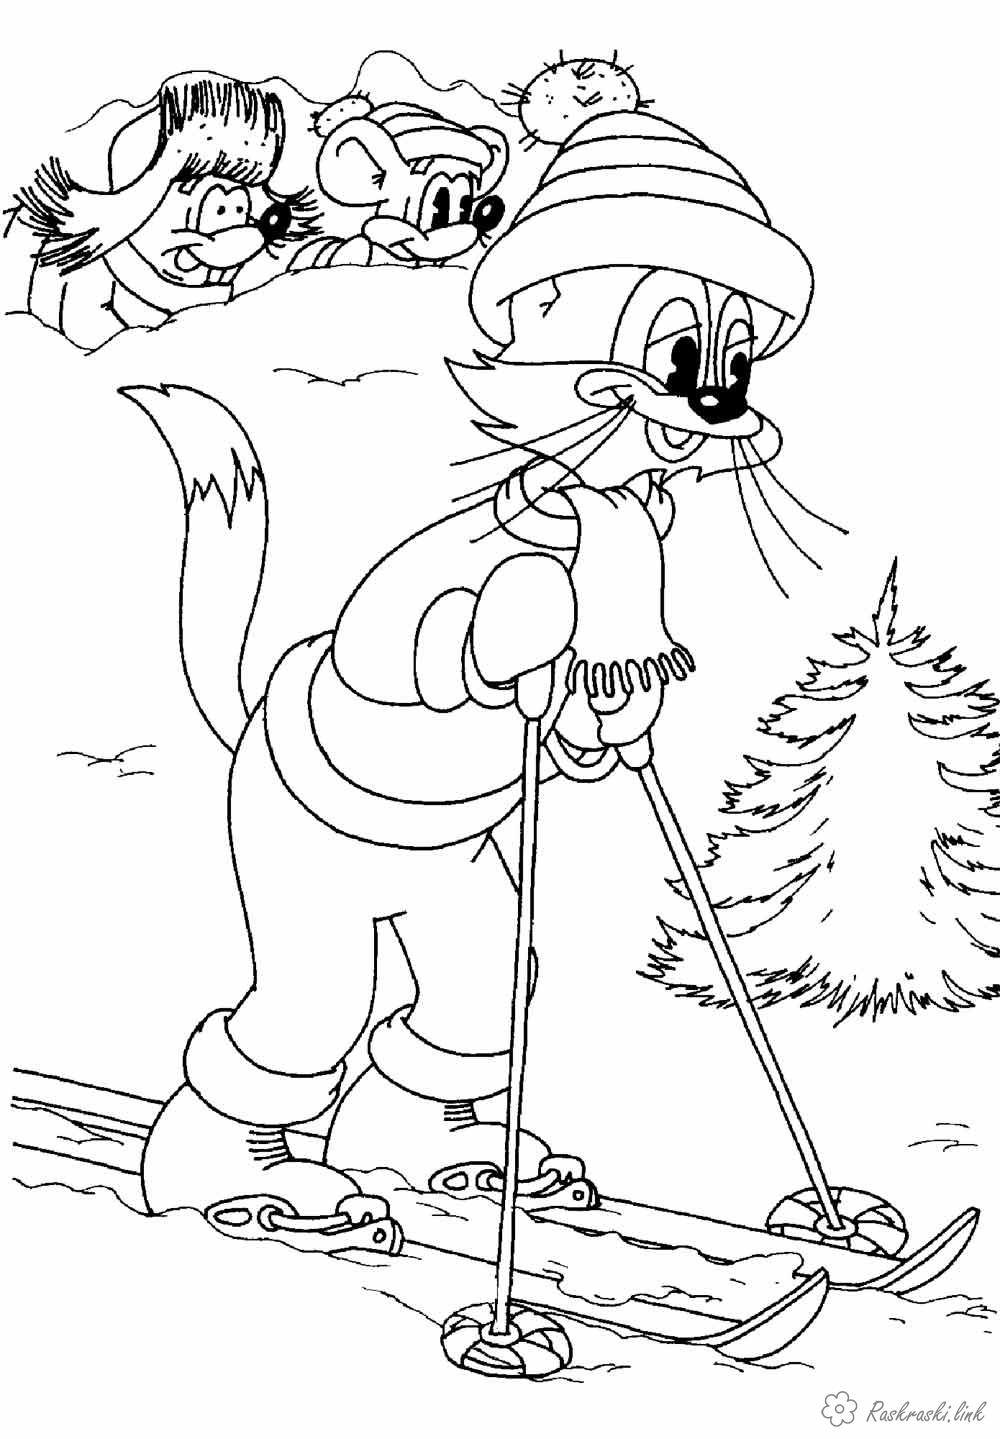 Розмальовки Радянські розмальовки Дитяча розфарбування по мультфільму кіт леапольд, мишенята